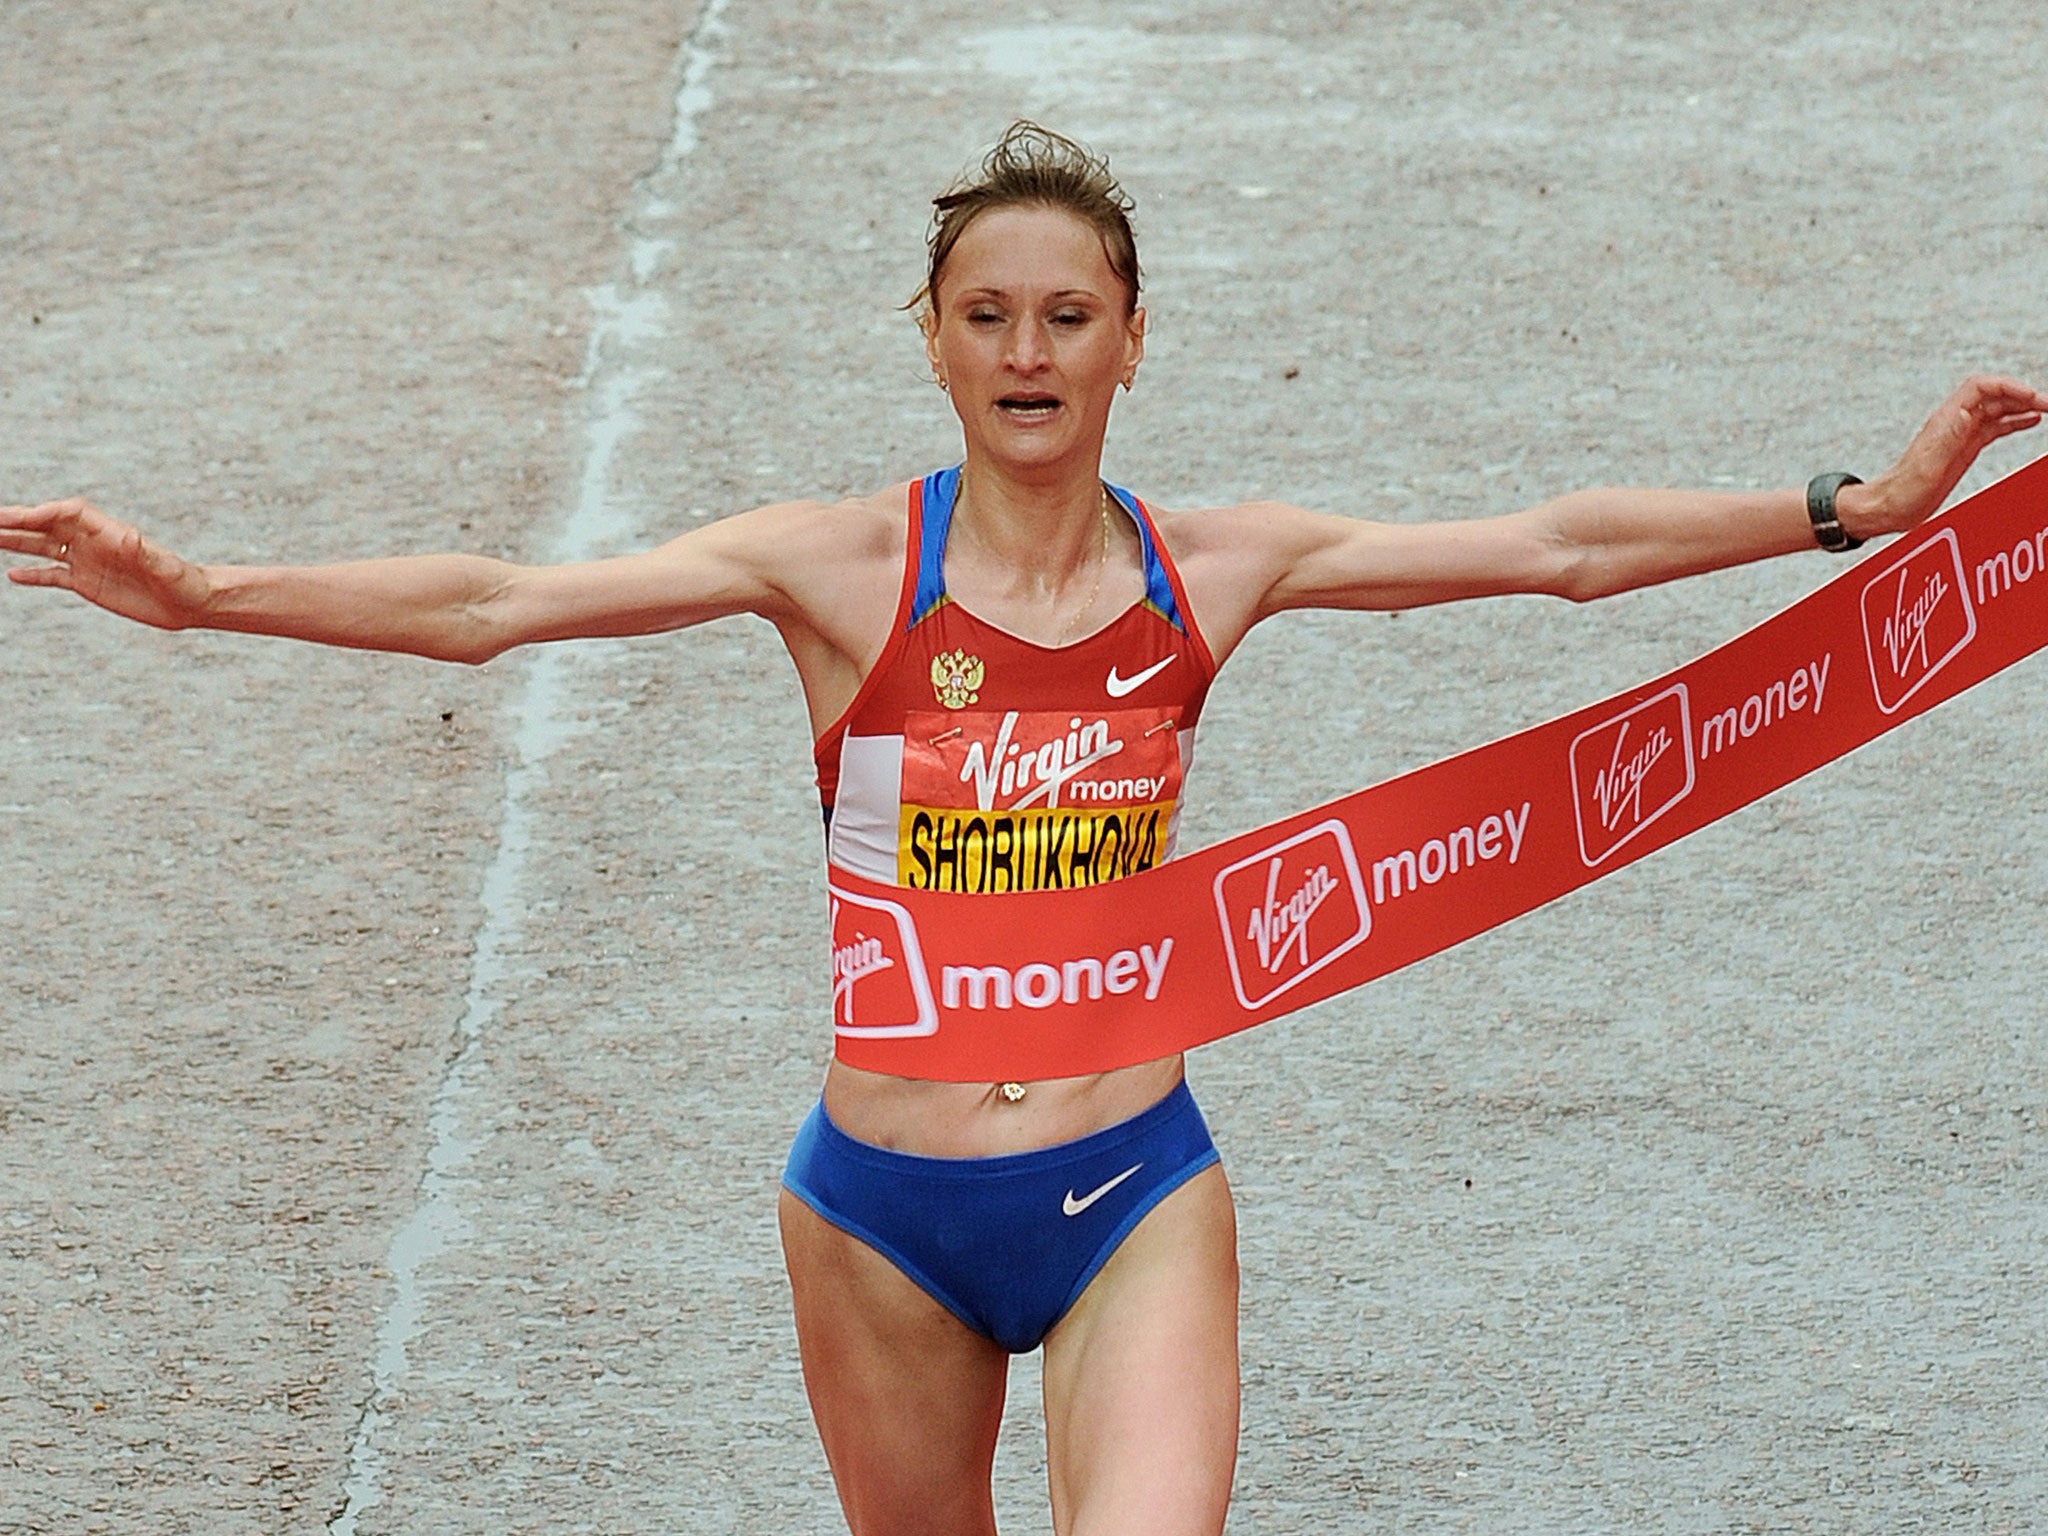 Liliya Shobukhova, pictured winning the London Marathon in 2010, was stripped of her title